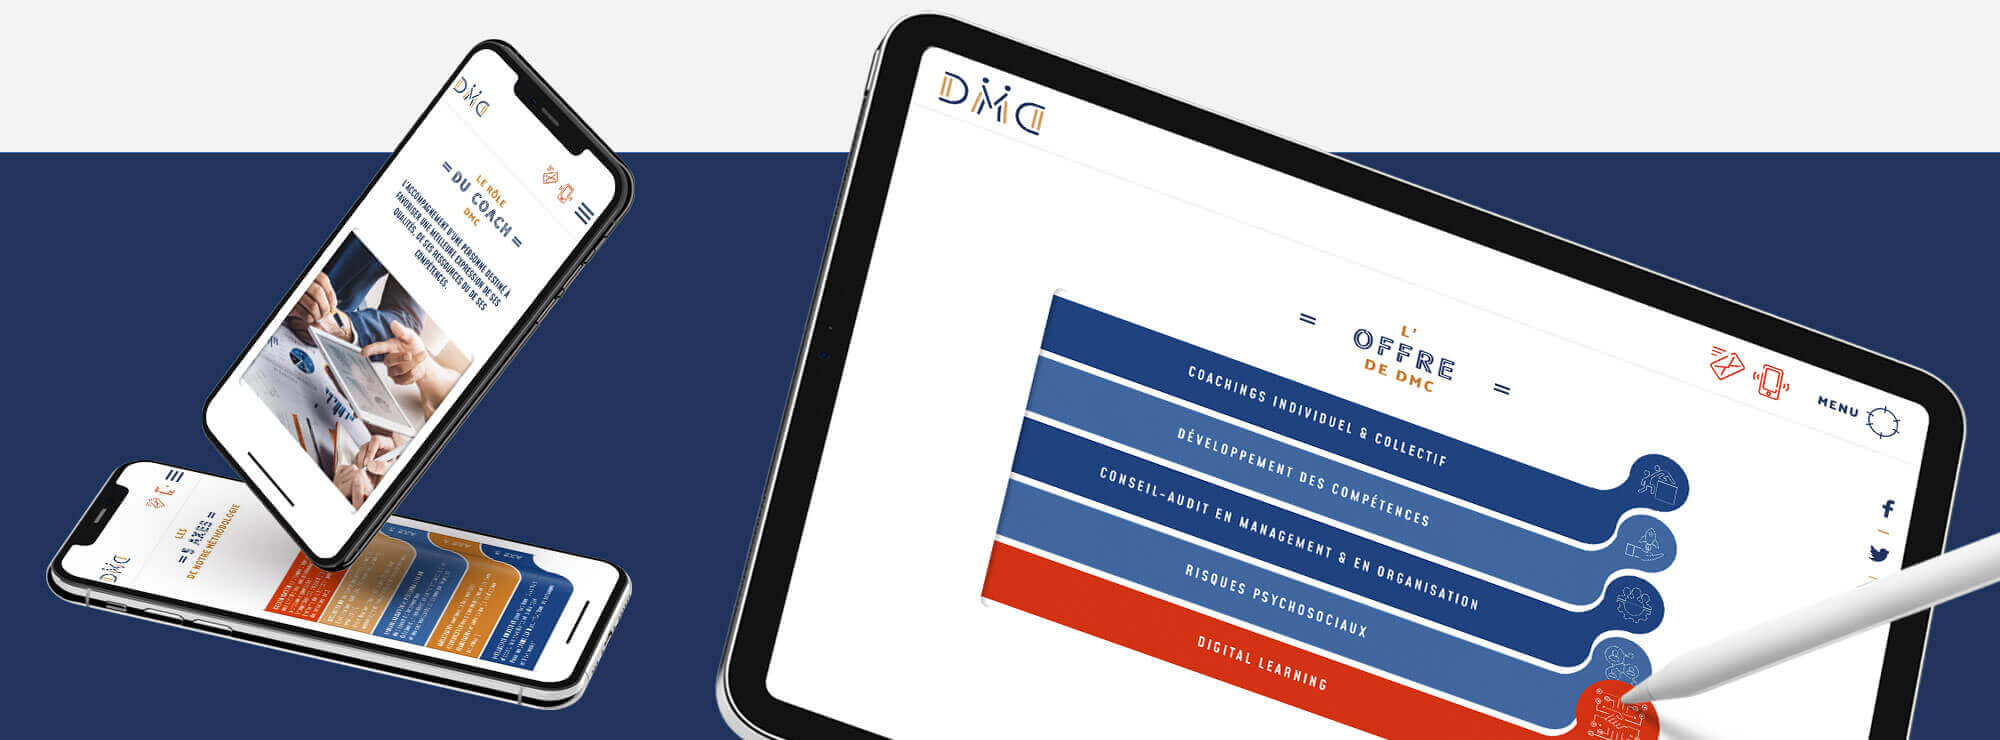 04 dmc iphone tablette axe methodologie offre coach competence digital leaning.jpg